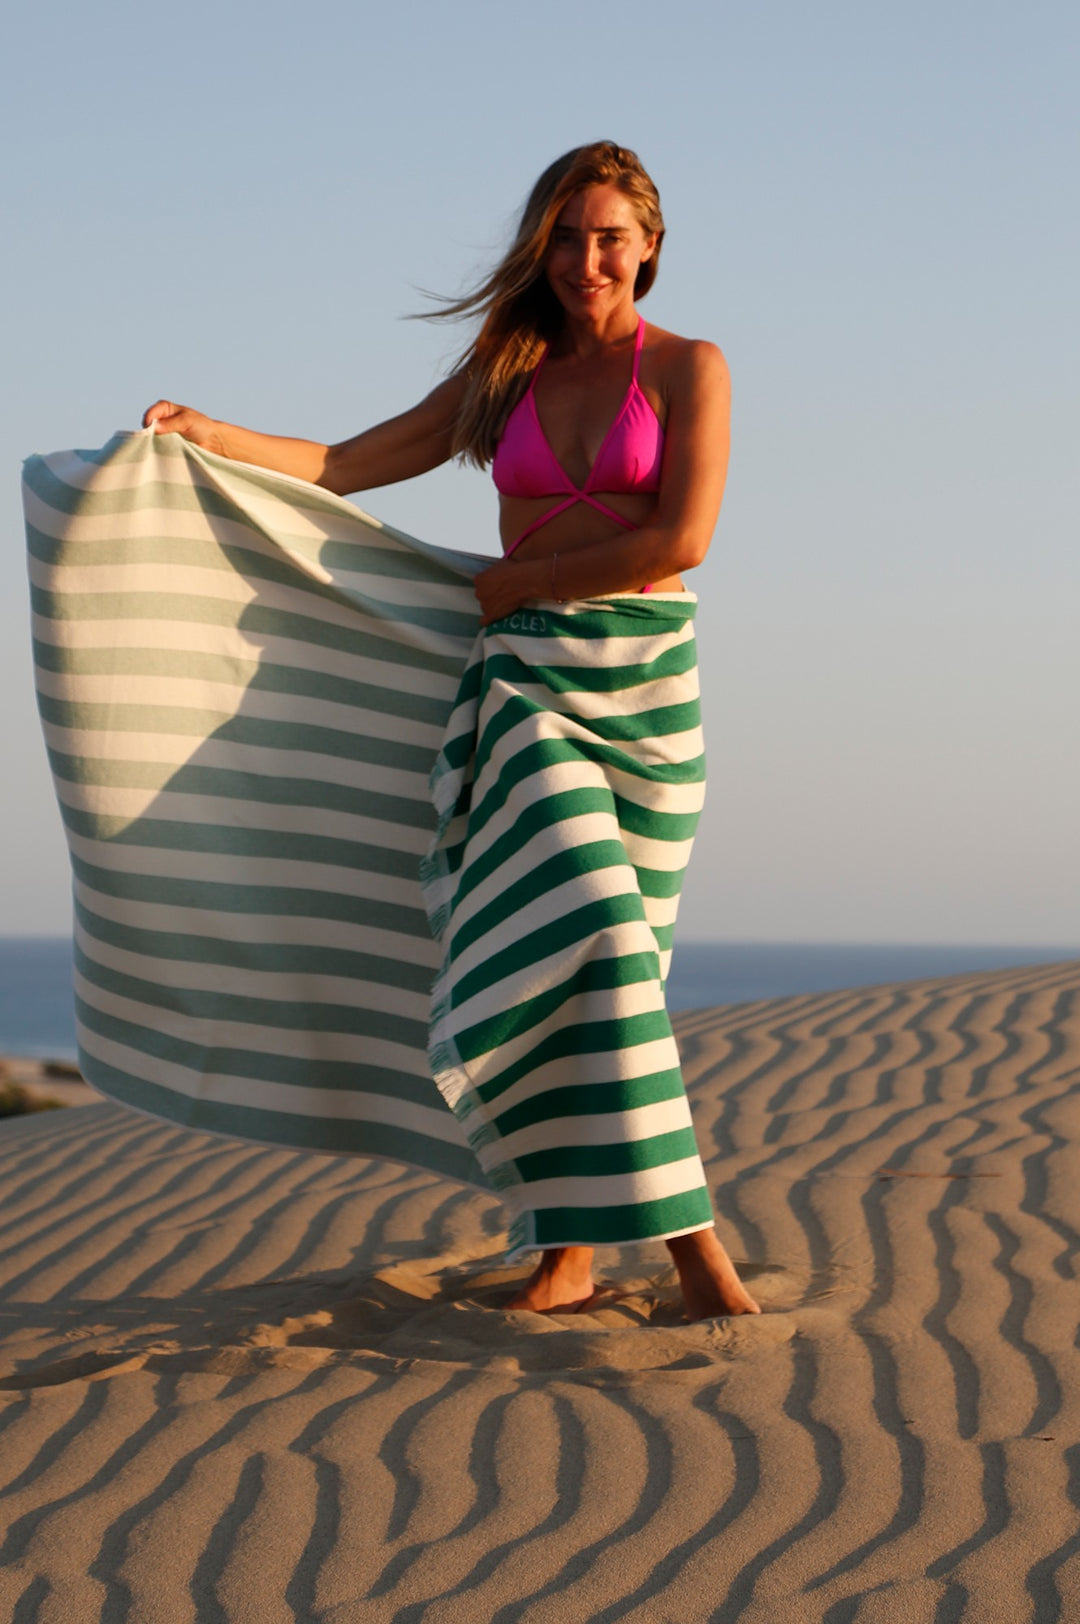 Delmor Lime Beach Towel